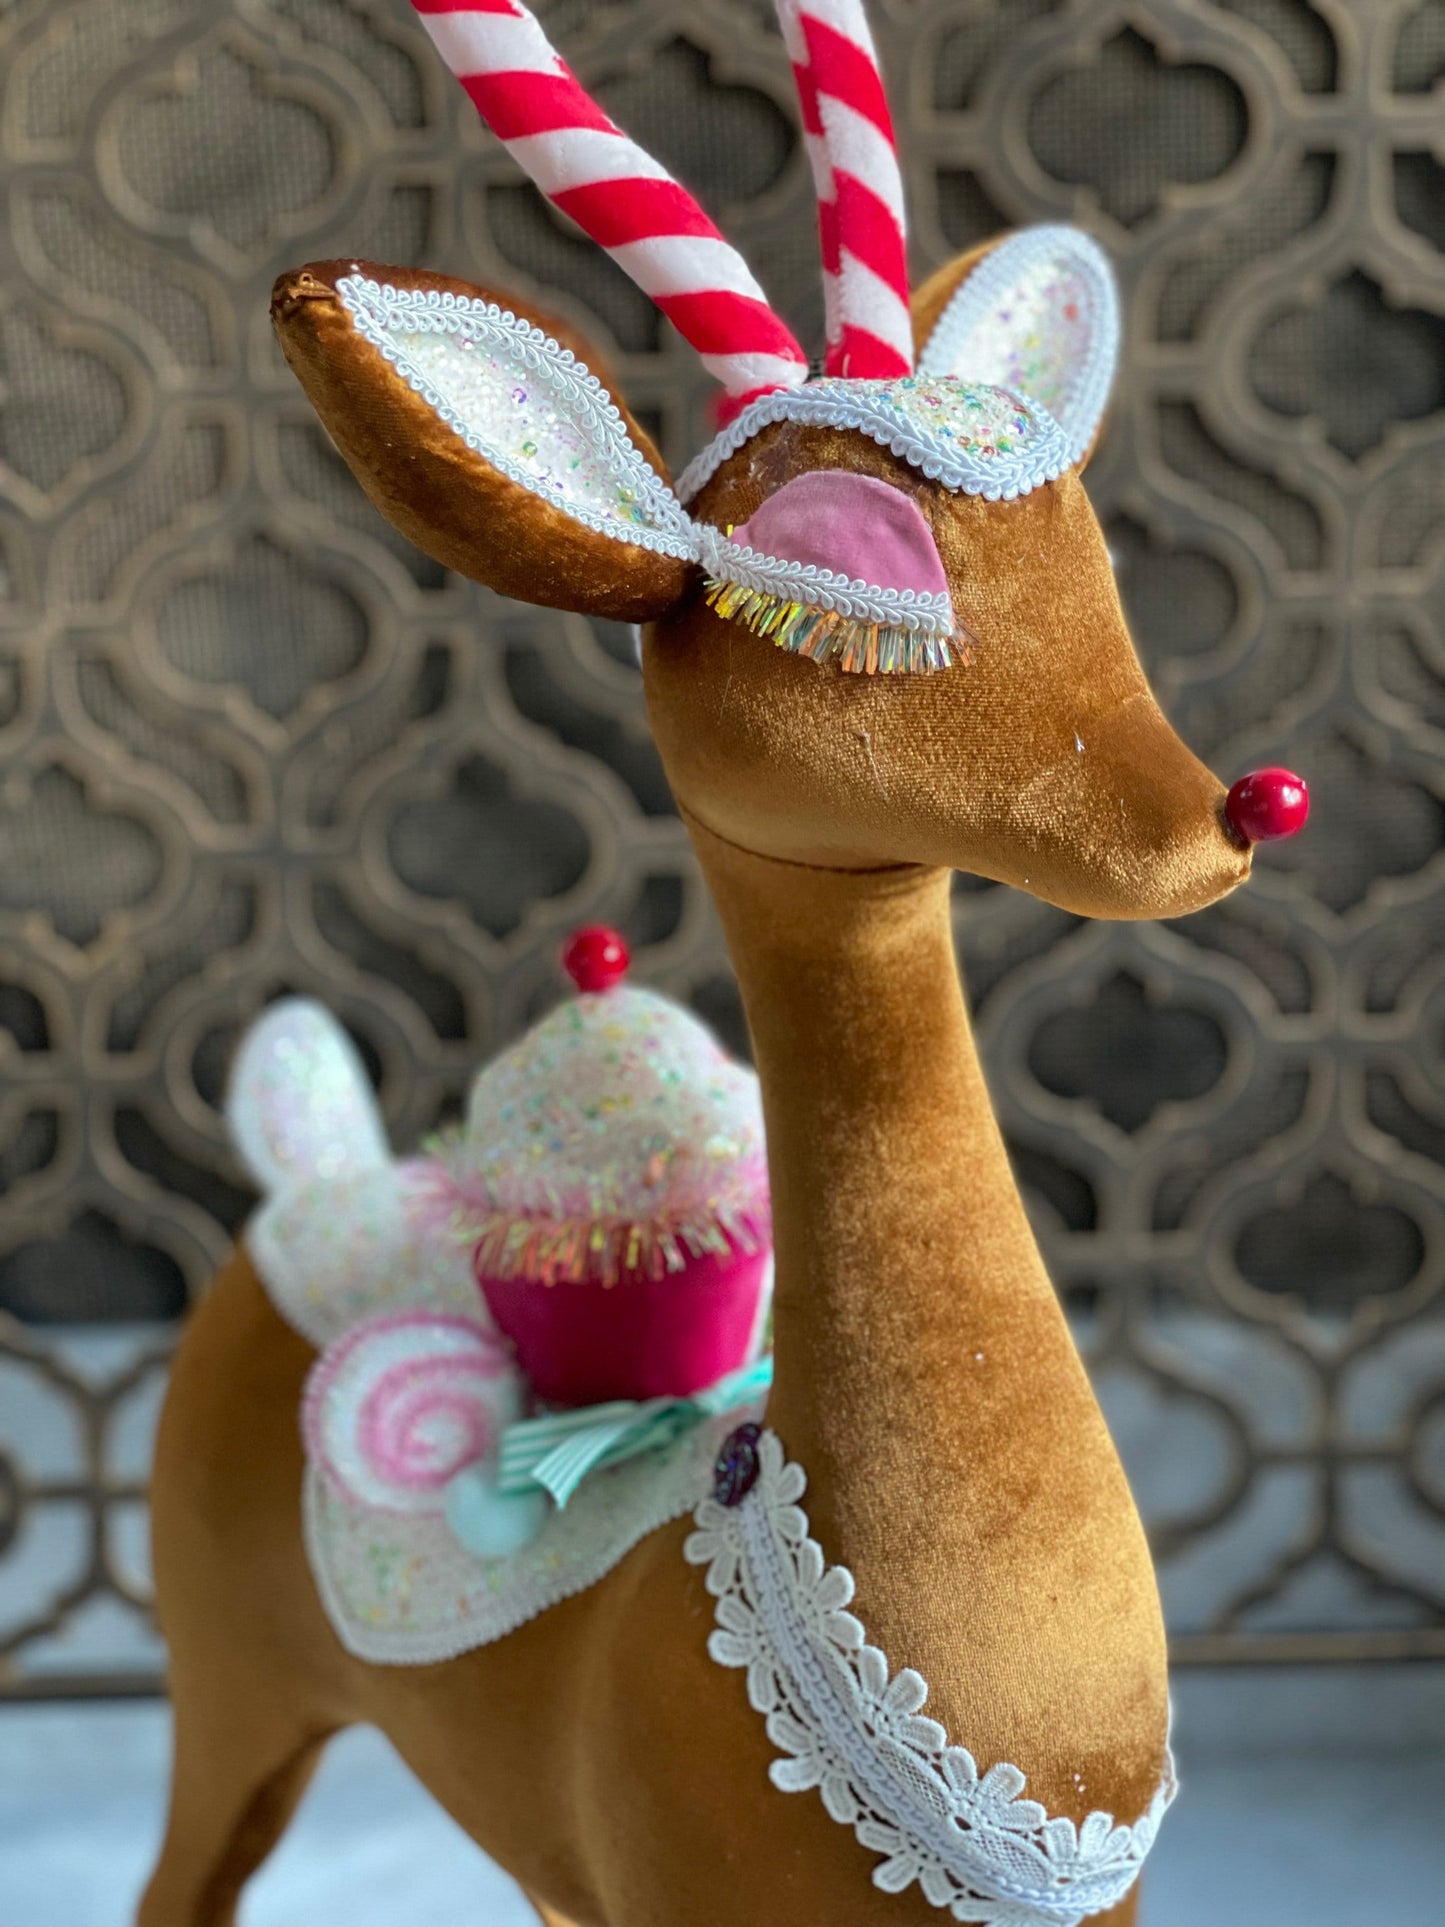 30” Reindeer with cupcake and candies standing ornament. Display reindeer. Christmas.